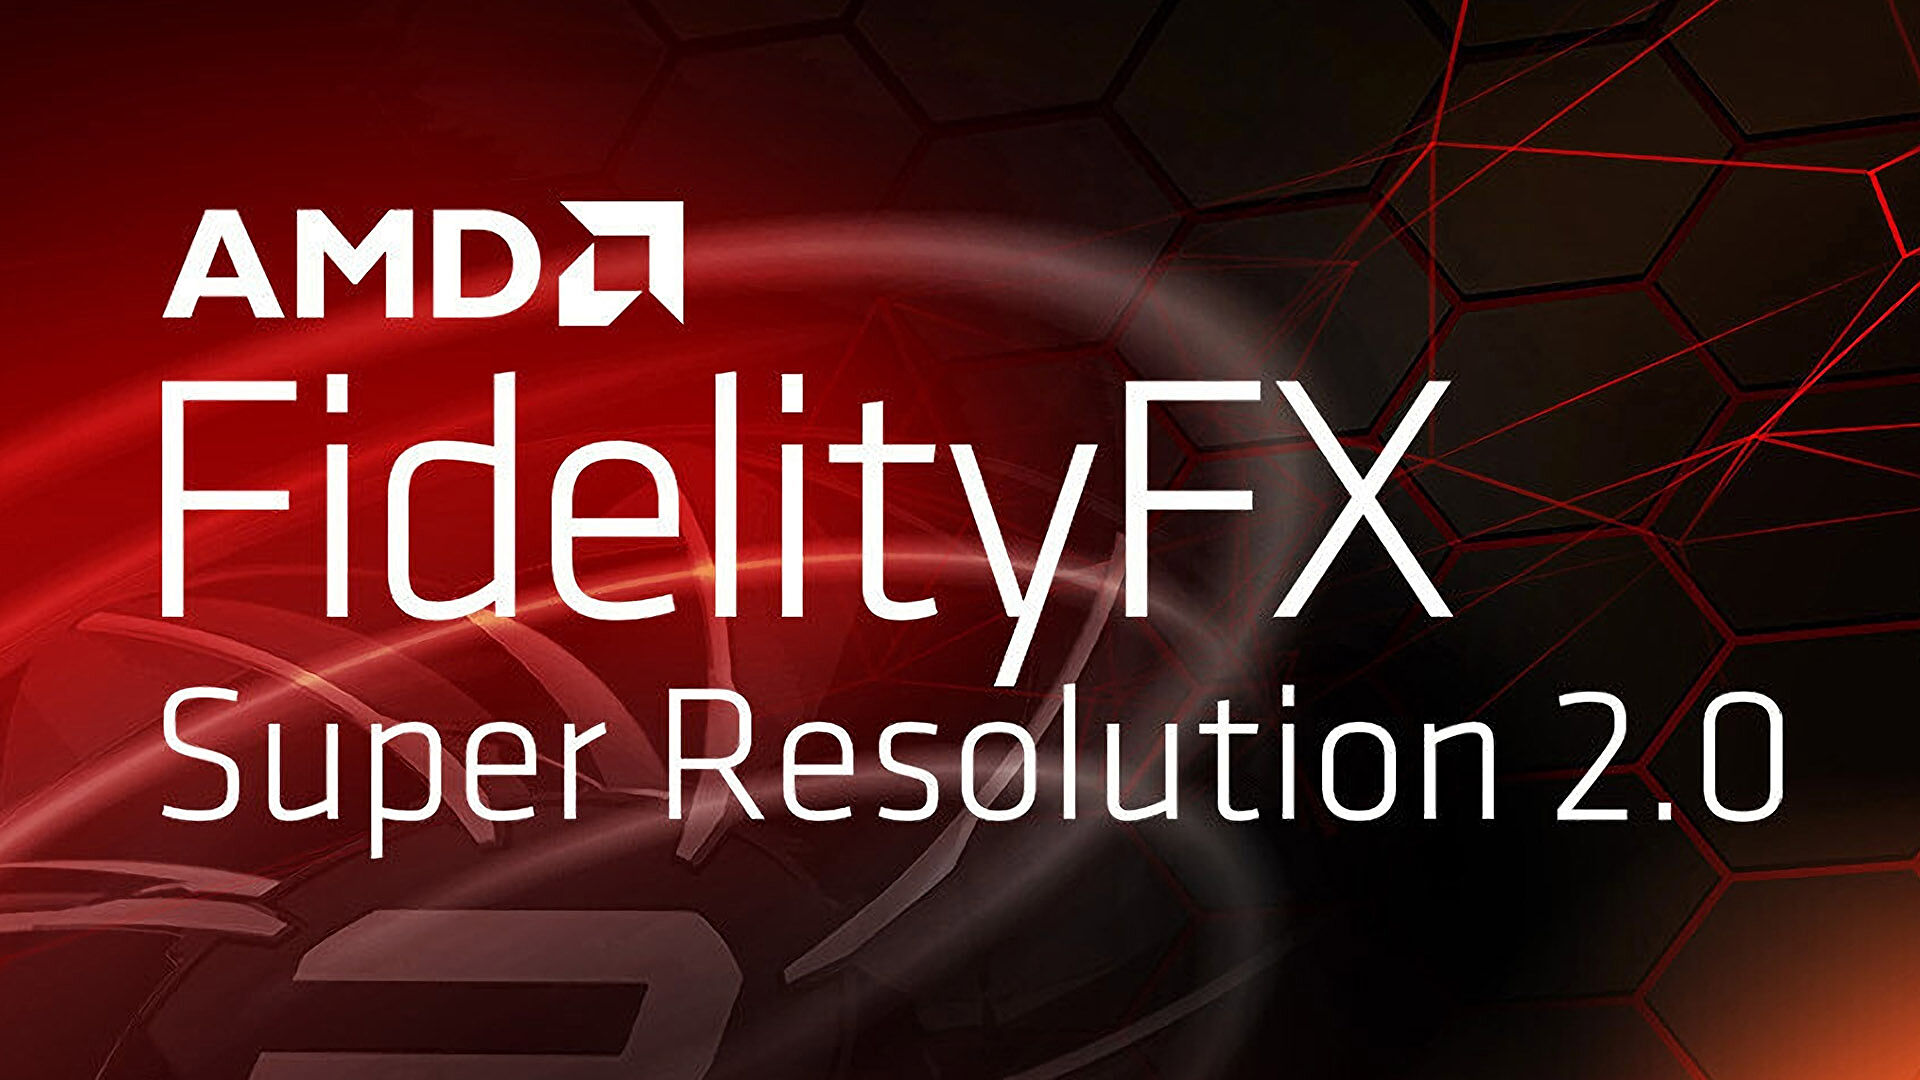 AMD Fidelity FX Super Resolution 2.0: the new Radeon upscaler is genuinely impressive